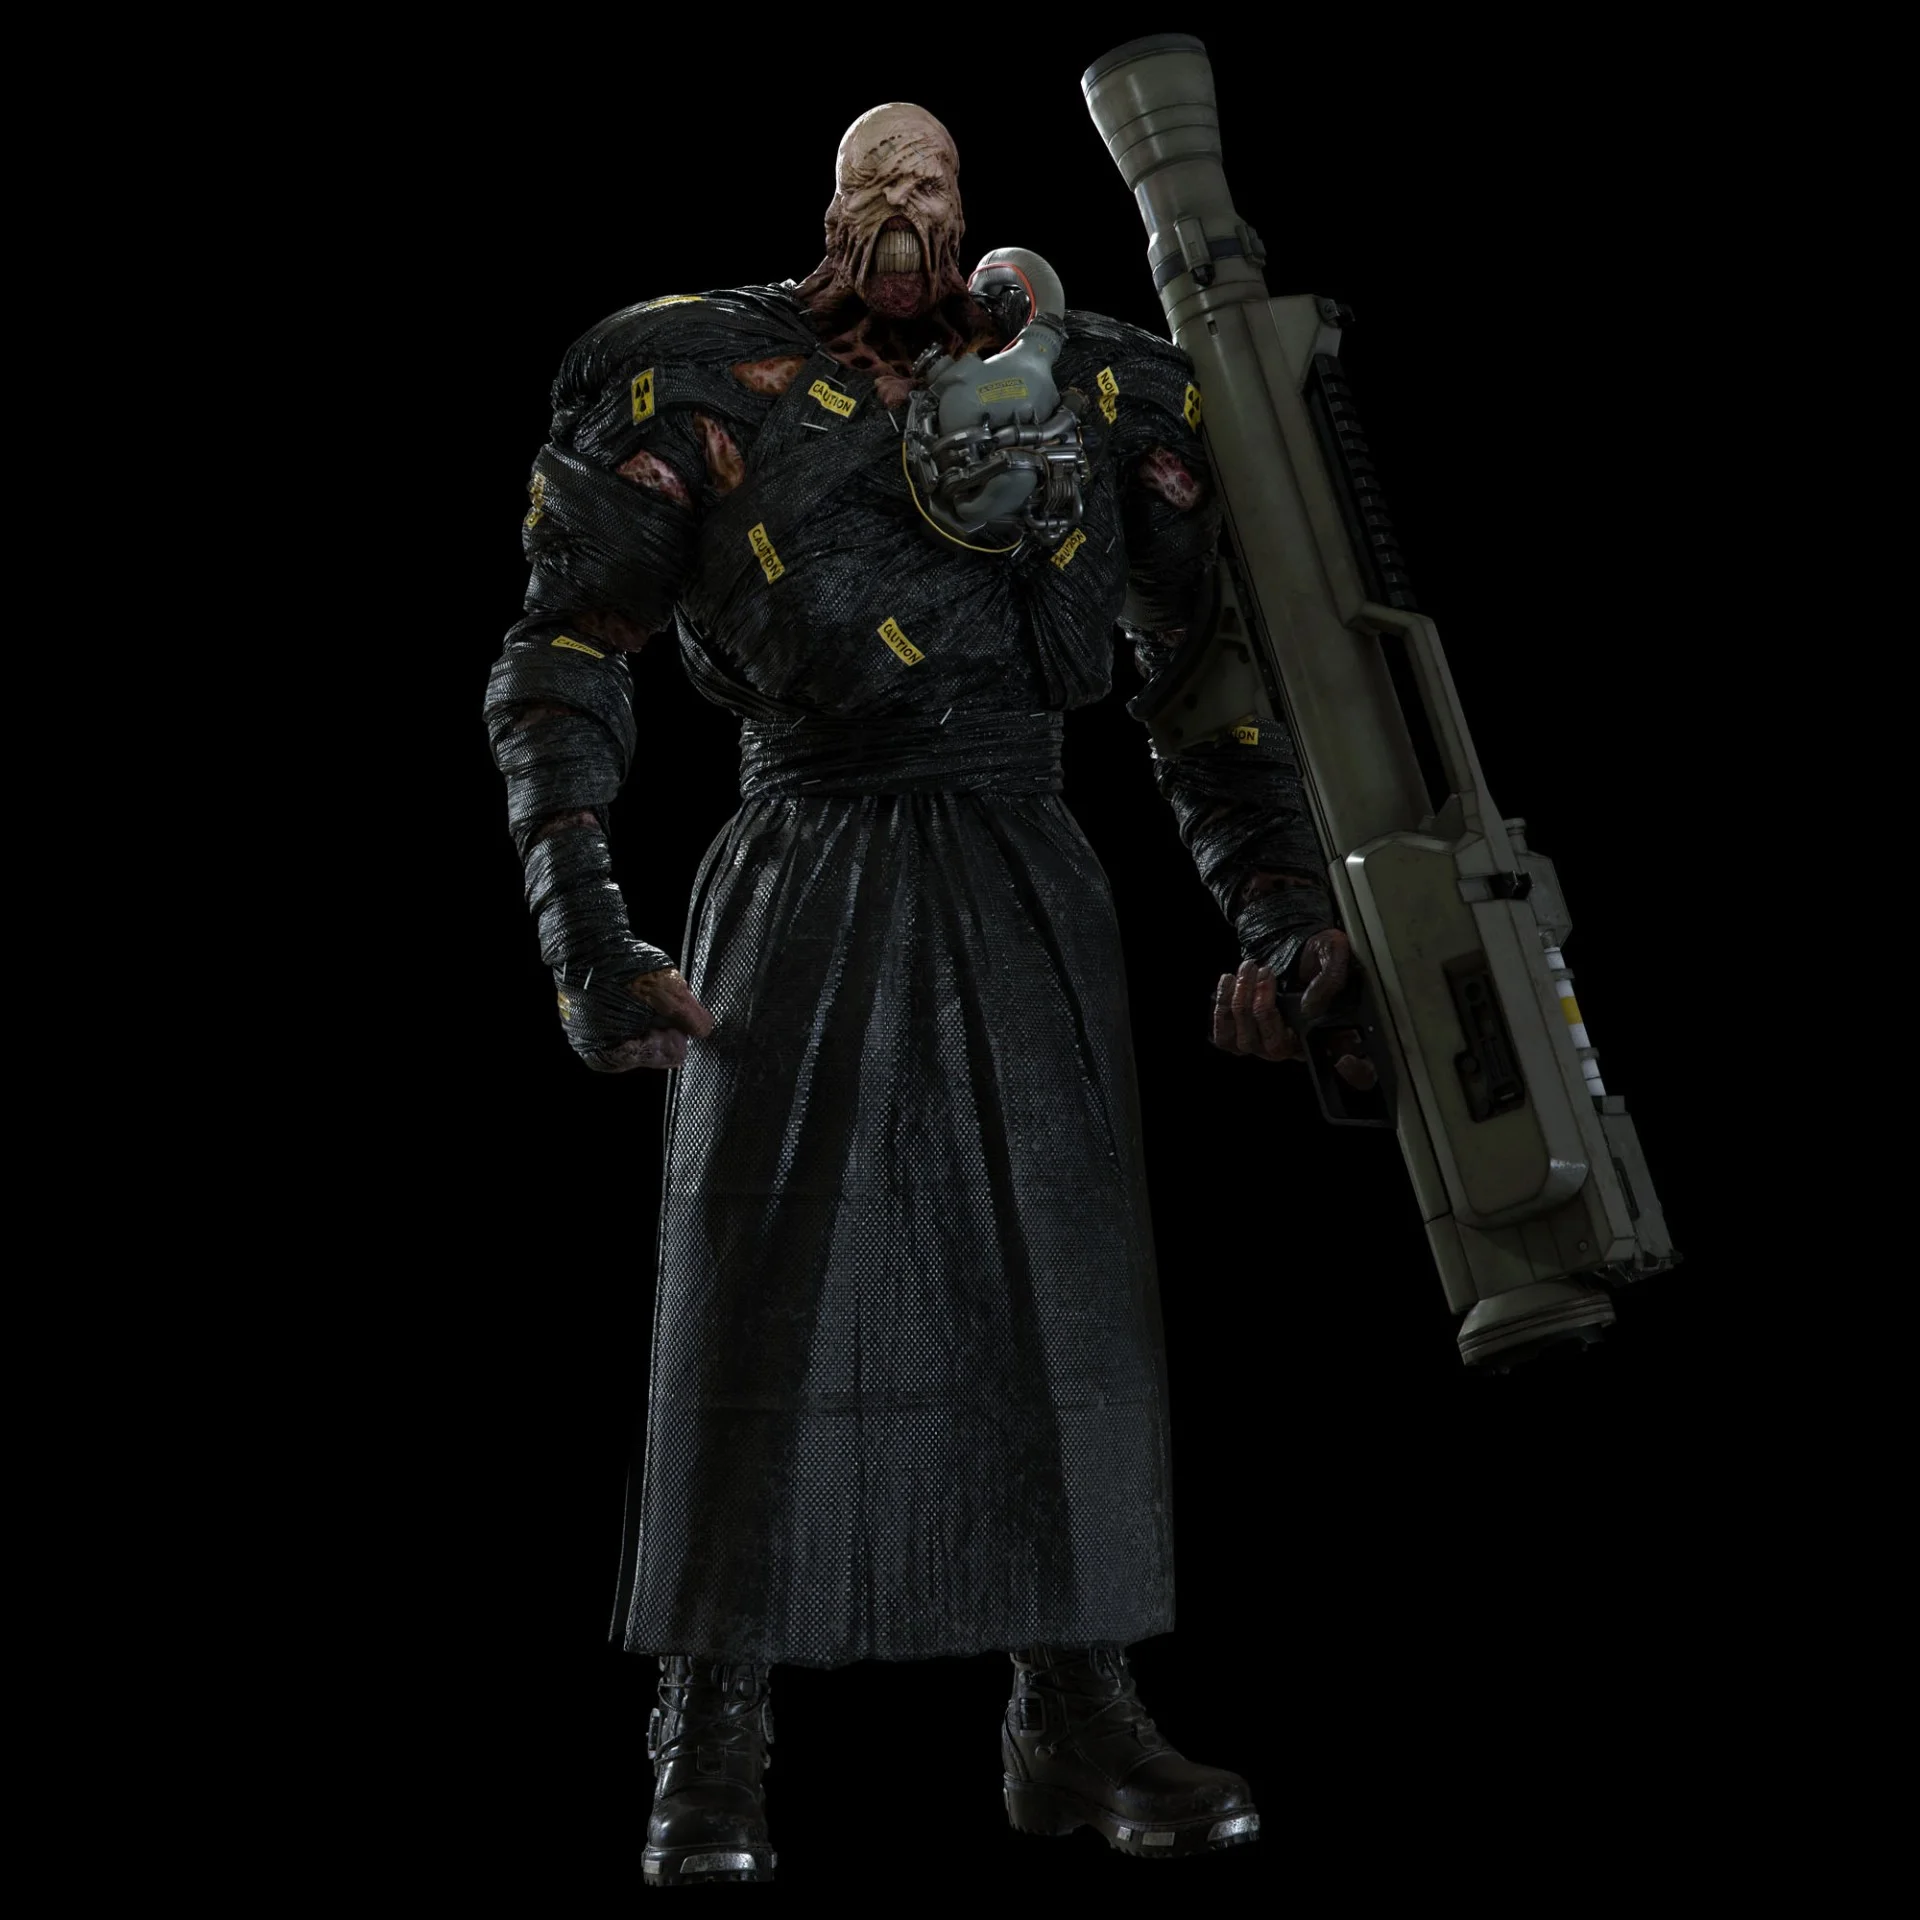 Второй трейлер ремейка Resident Evil 3 посвящён Немезису - фото 20